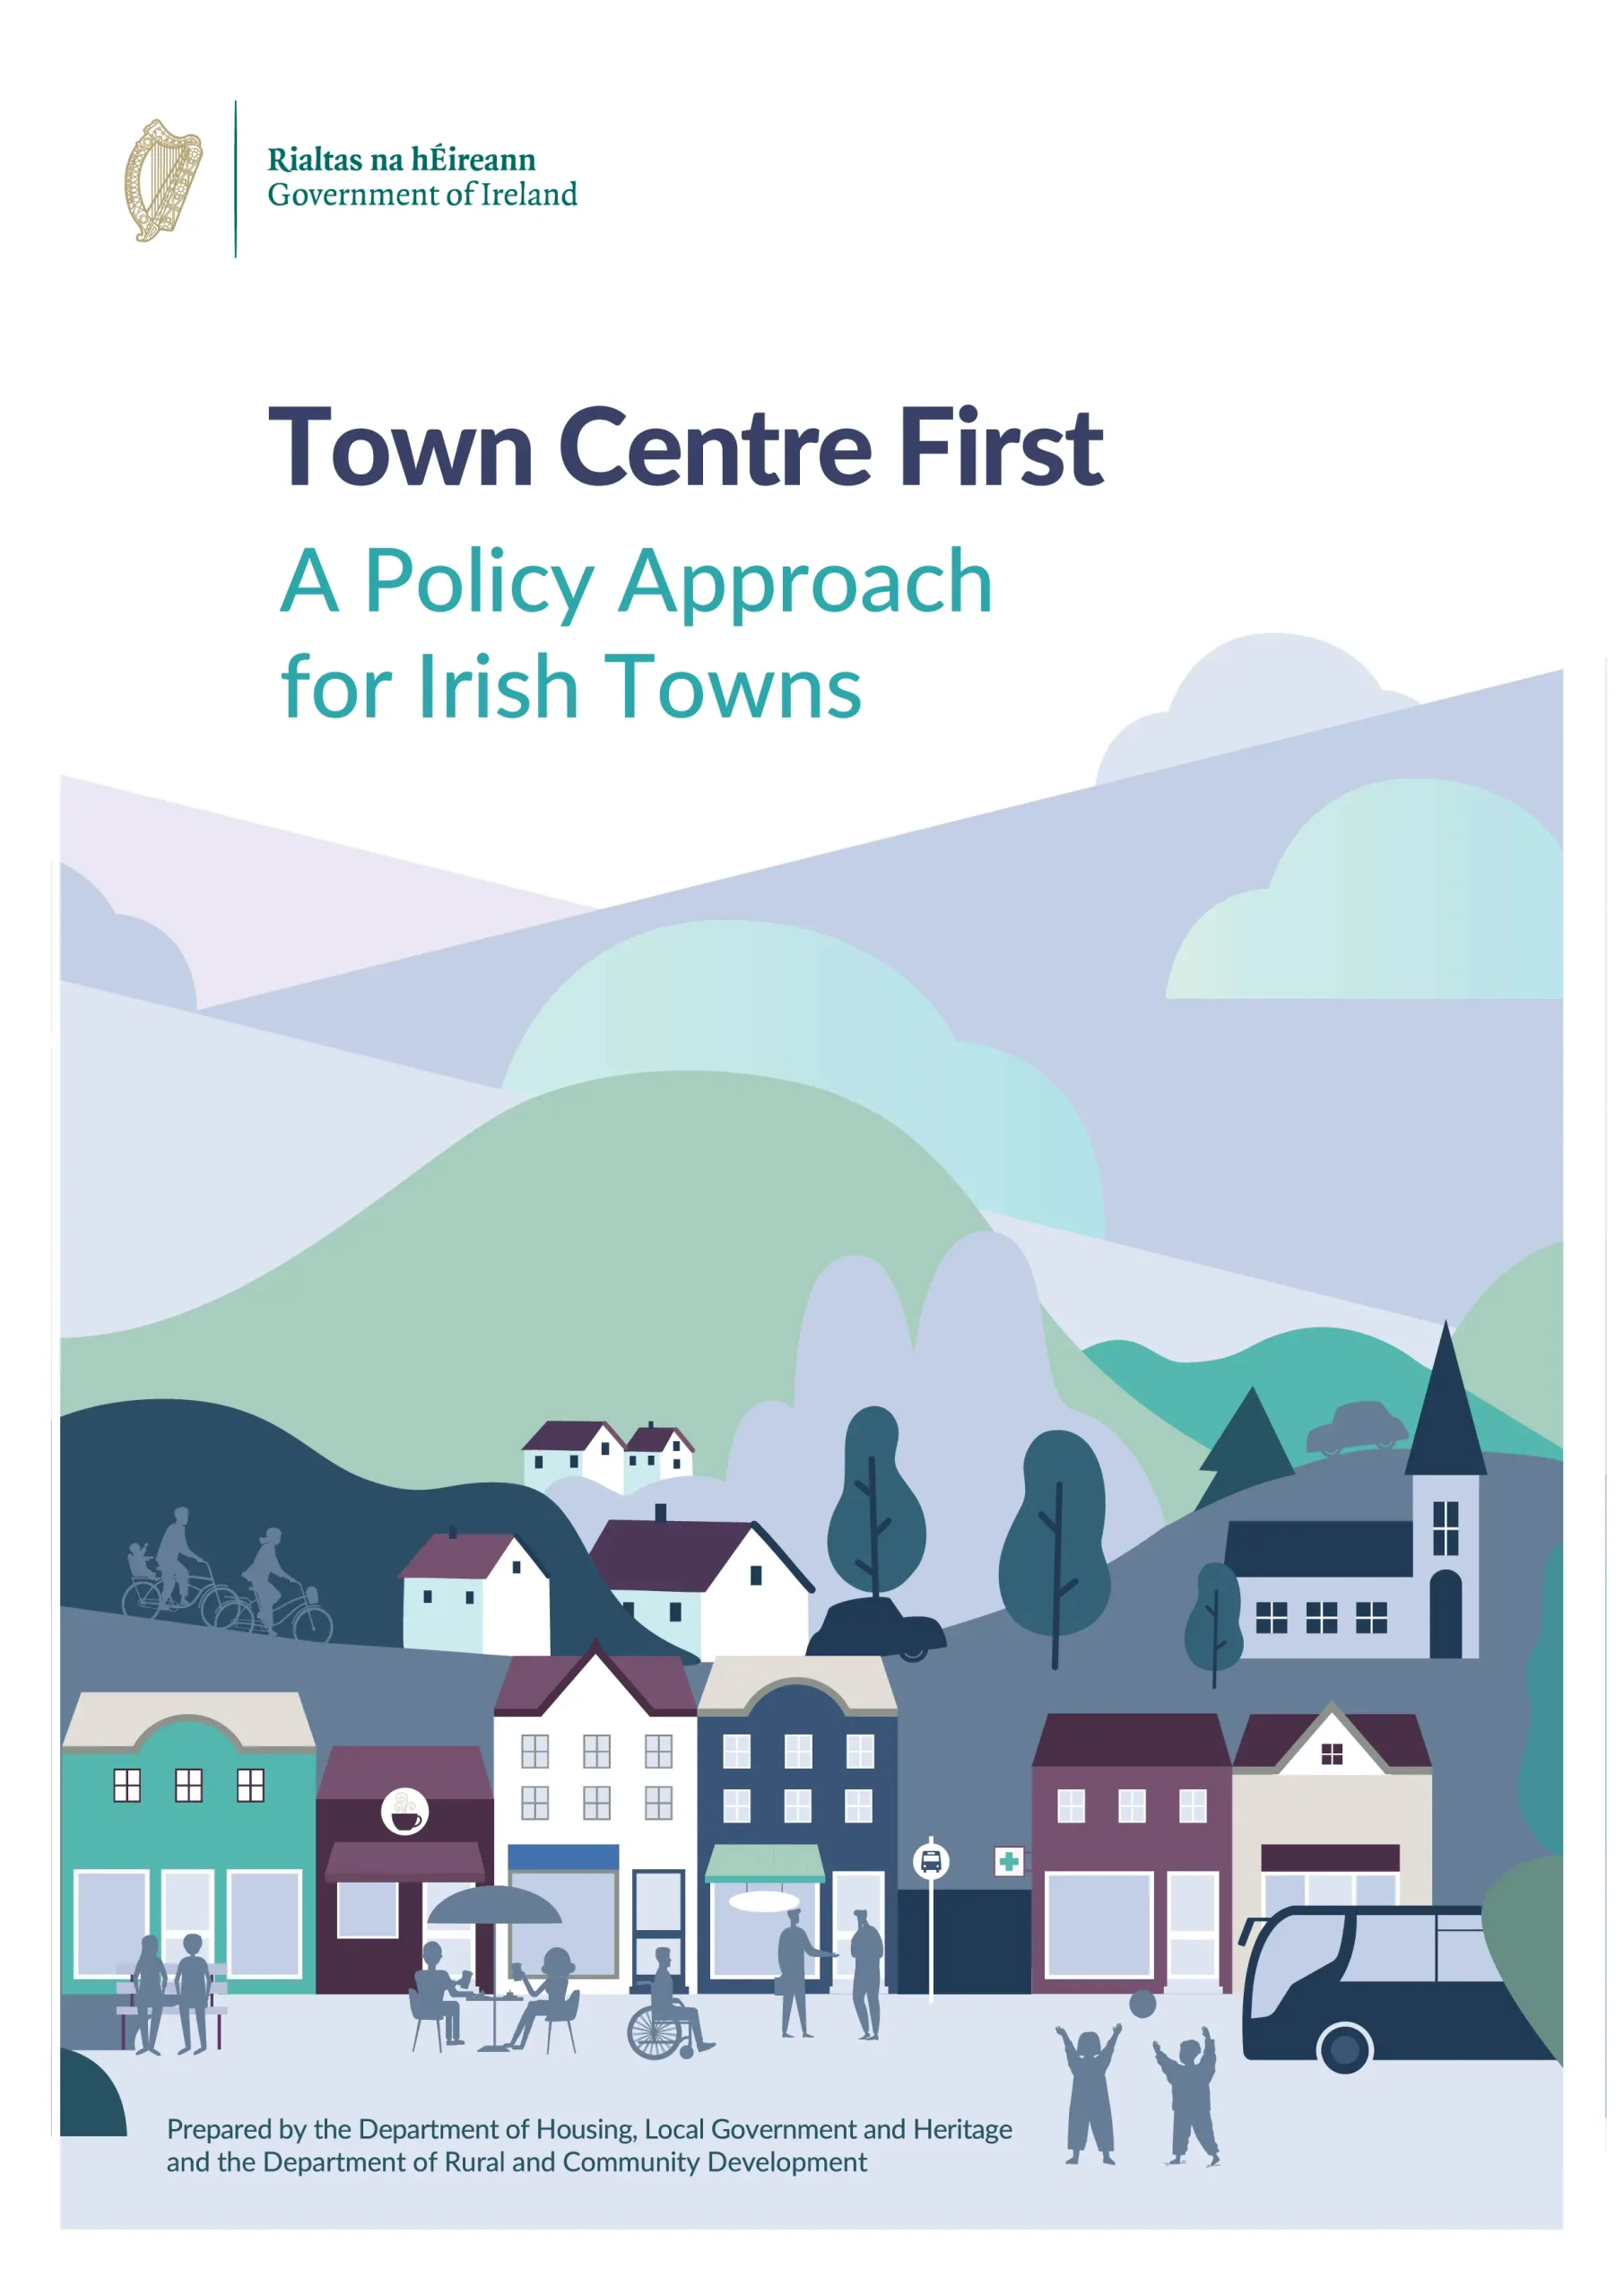 Town Centre plan